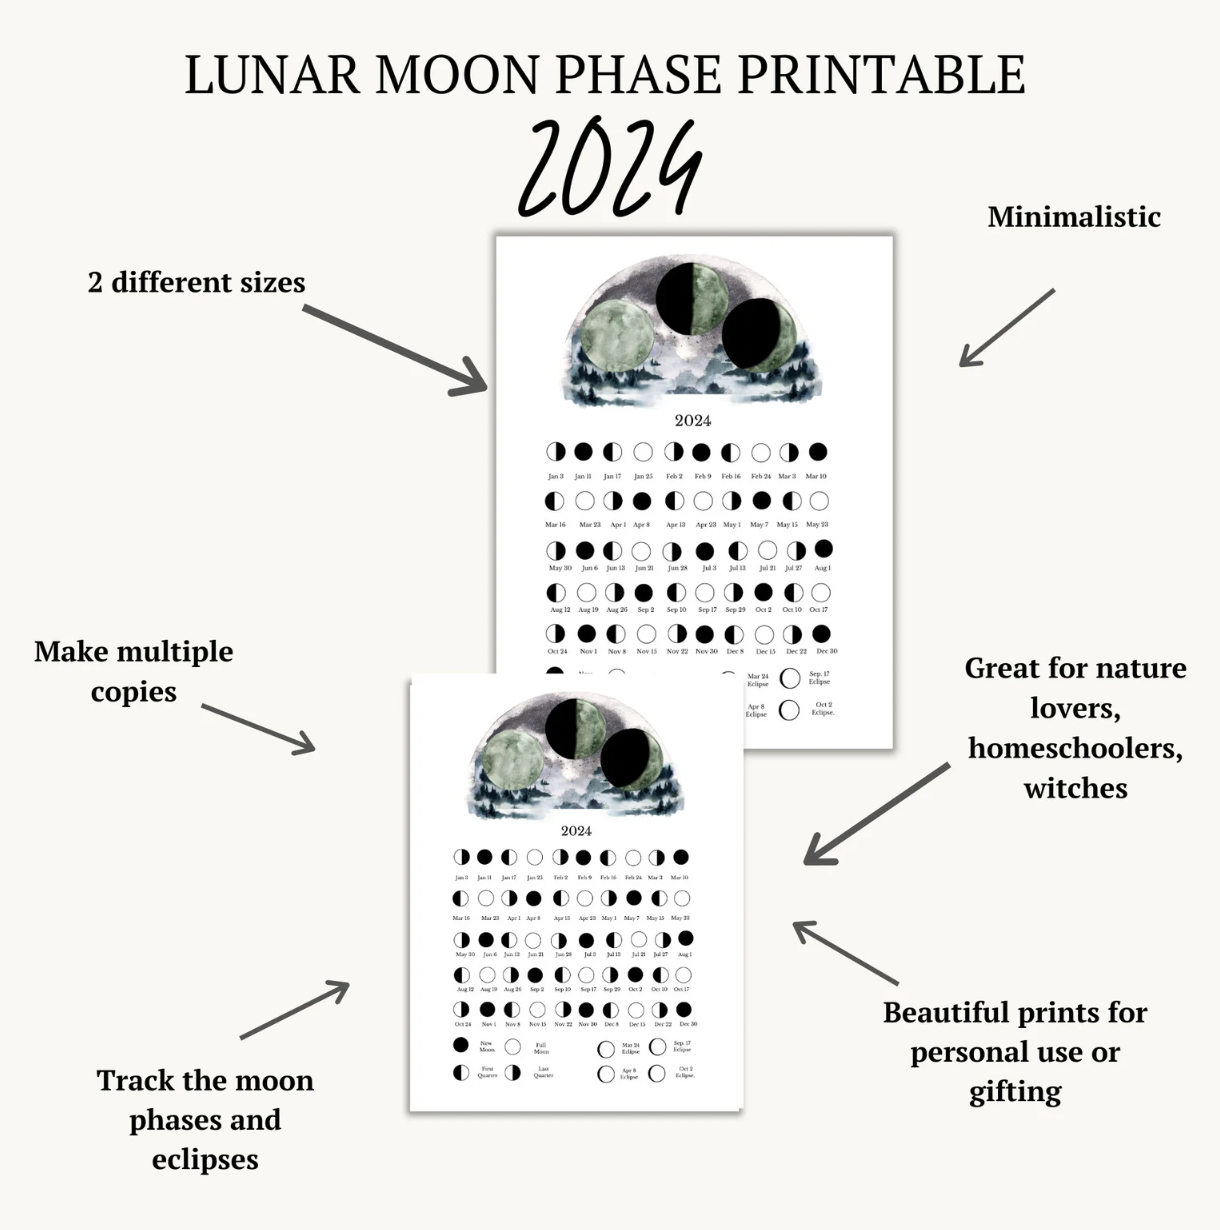 2024 Moon Phase Calendar from A Farm to Keep